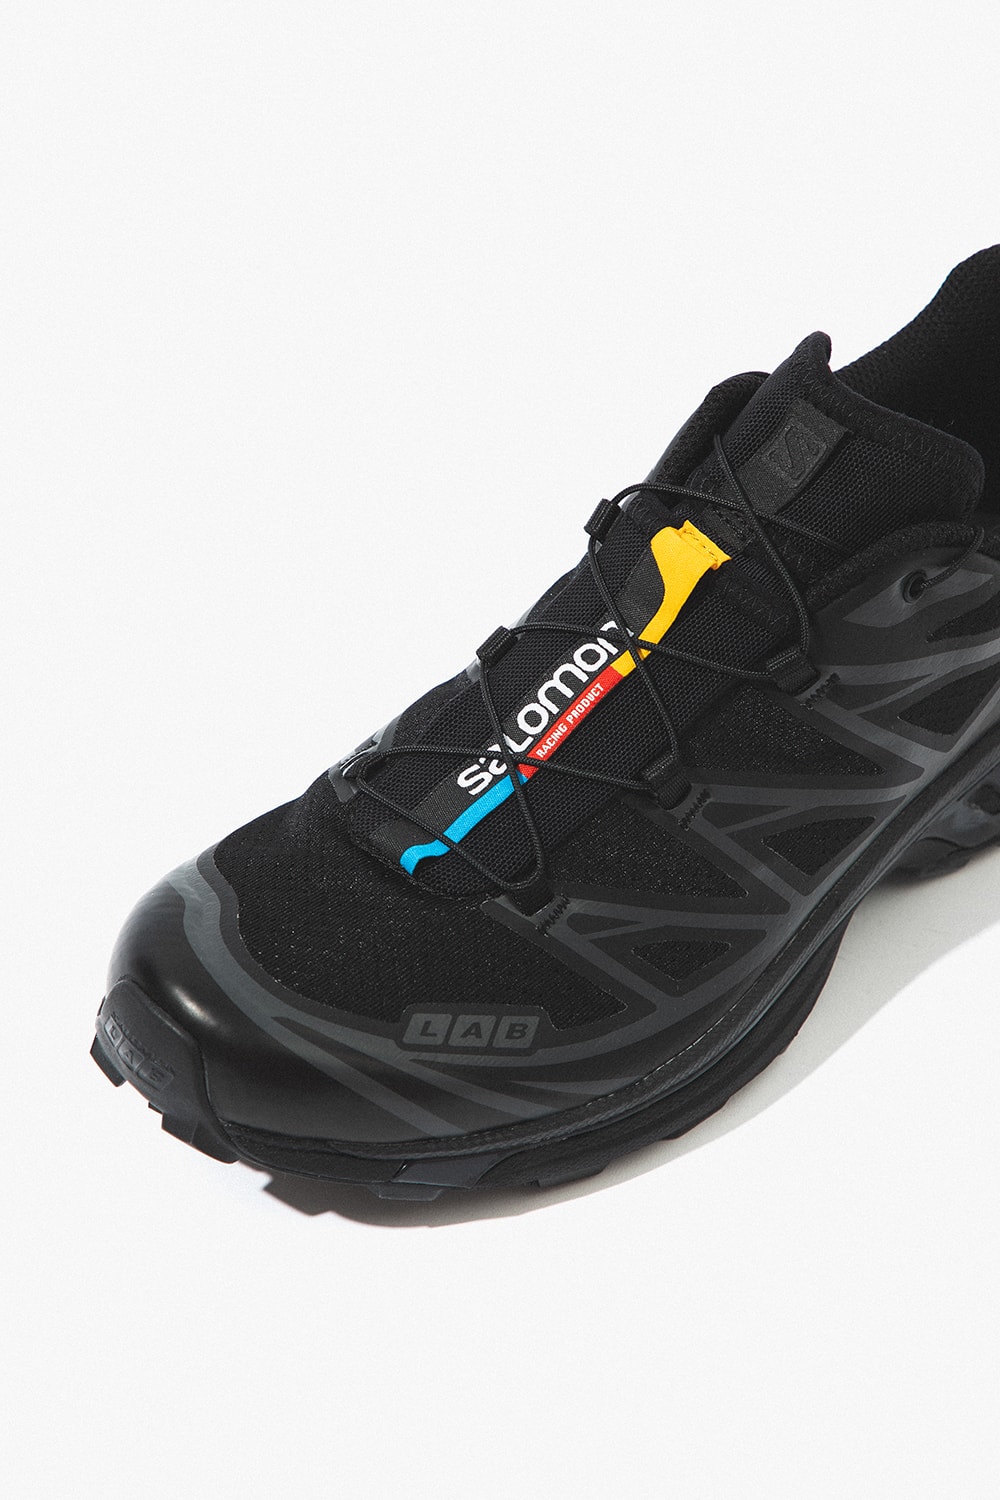 HBX 上架情報：Salomon 2020 秋冬系列鞋款